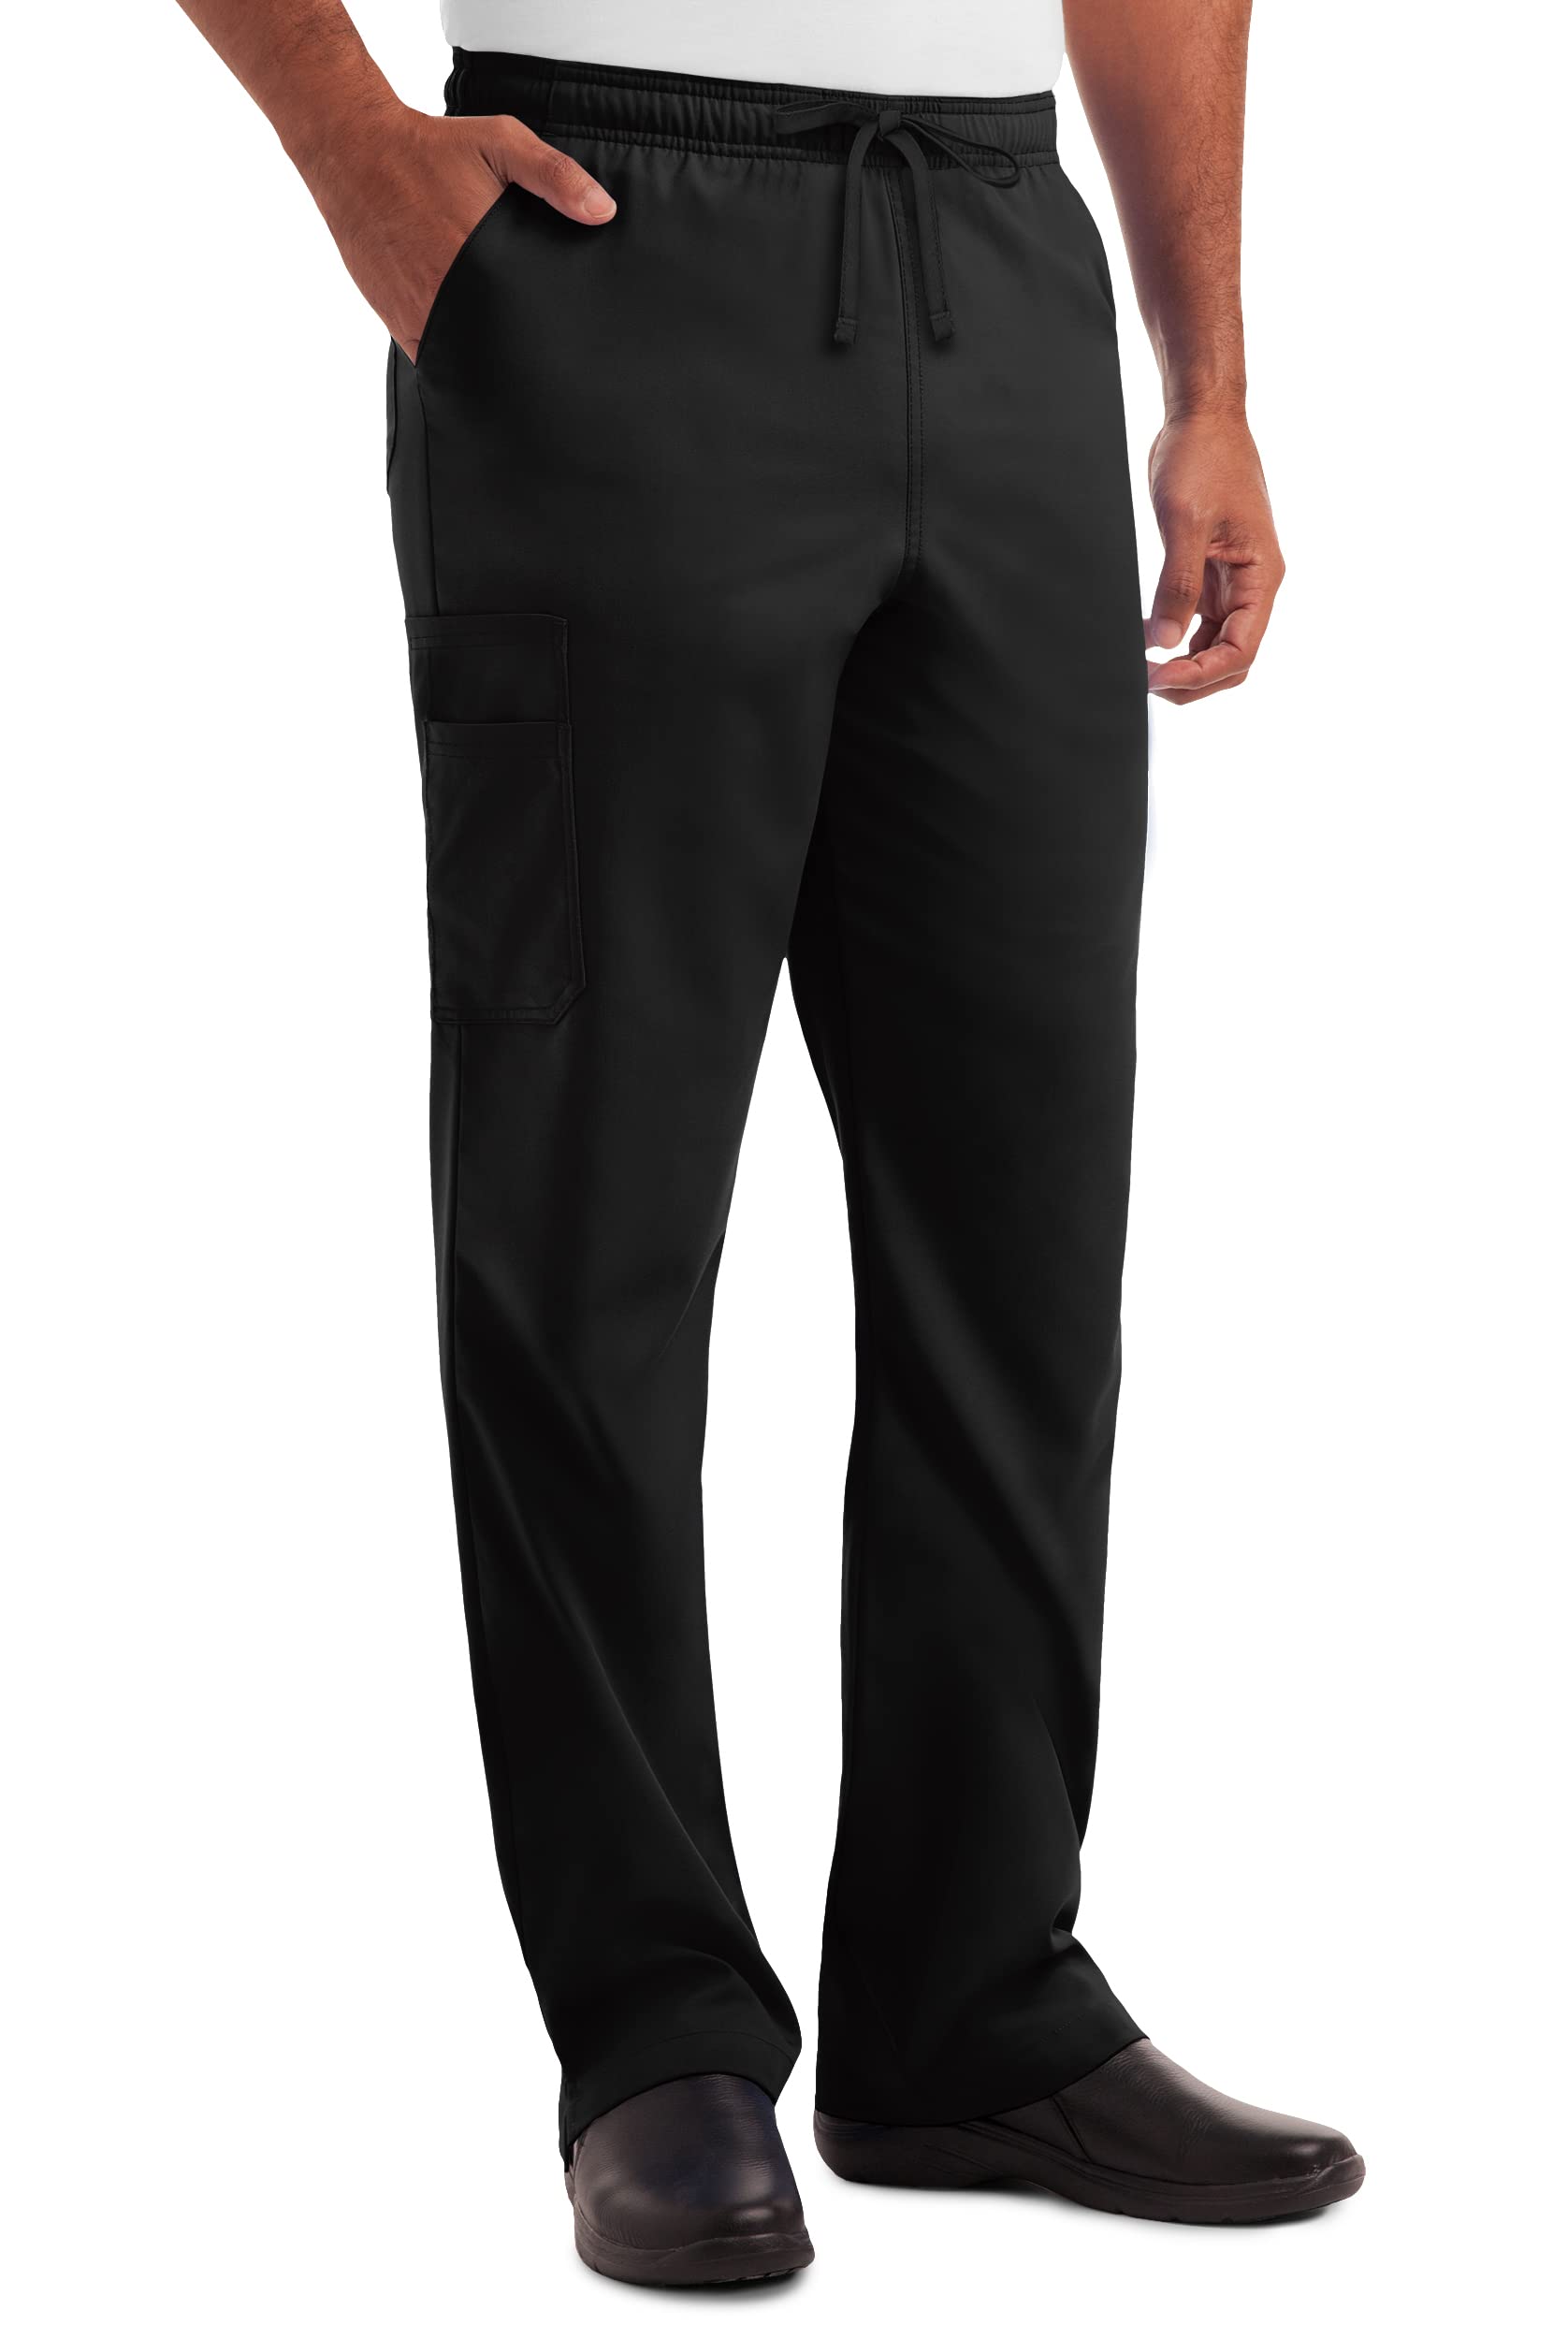 Jefferson RISE STRETCH Pants – Skobel's School Uniforms